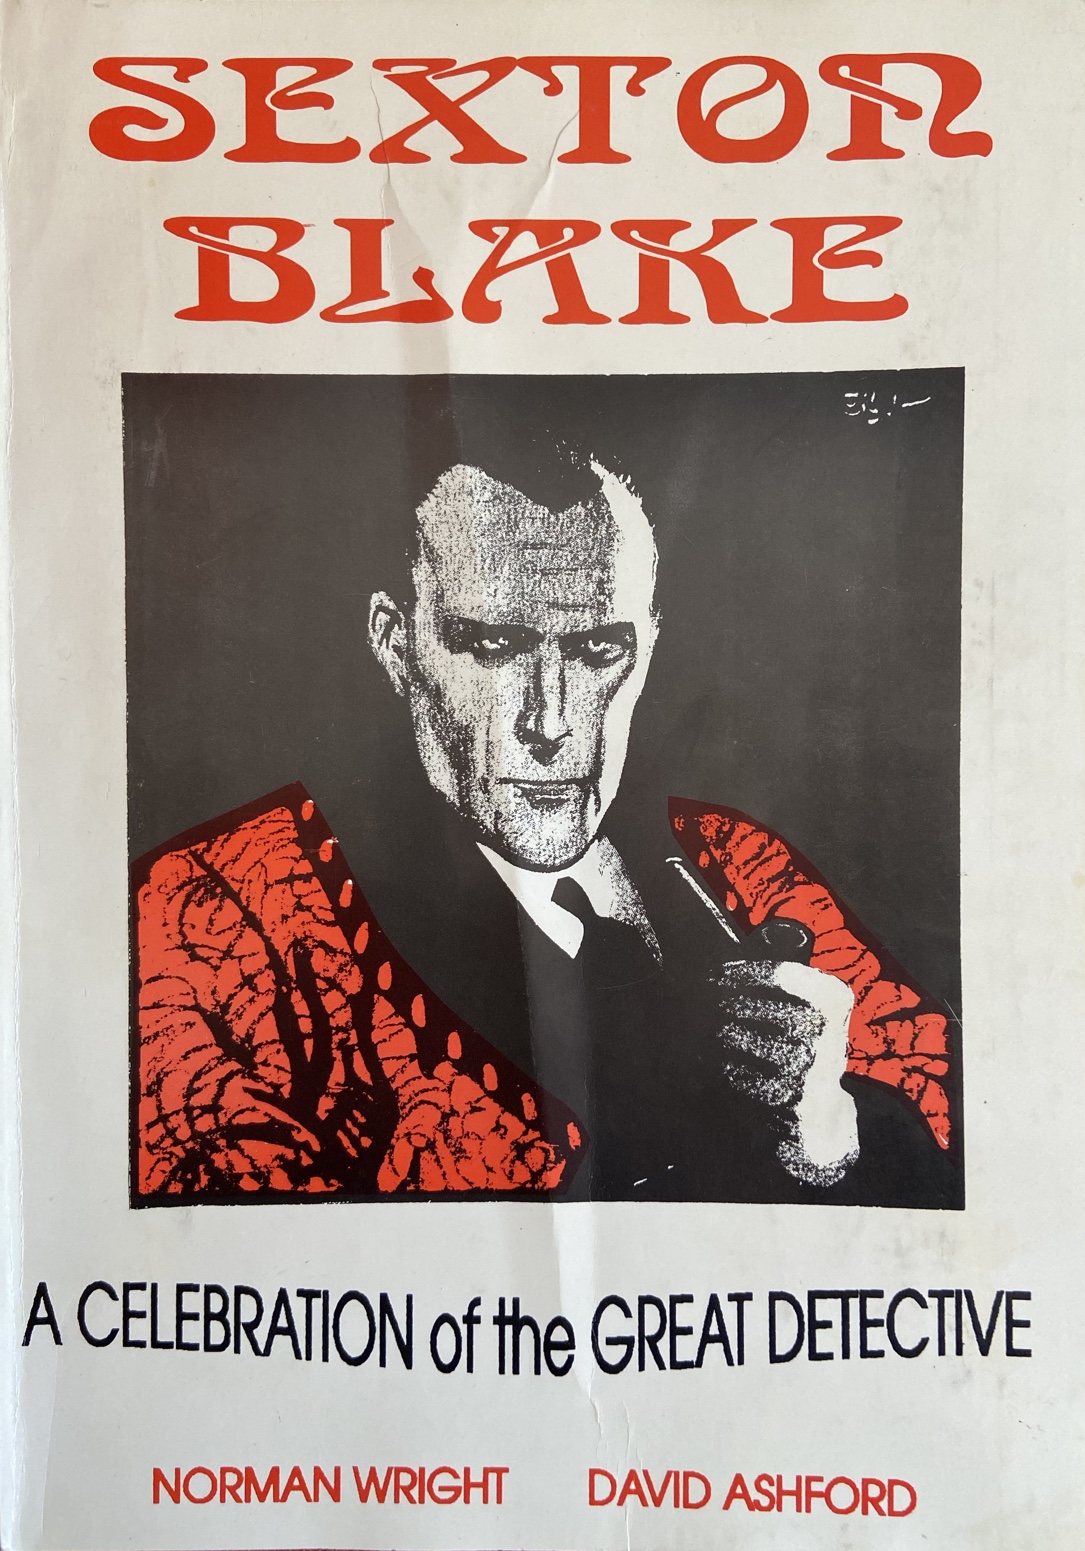 Sexton Blake - A Celebration of the Great Detective